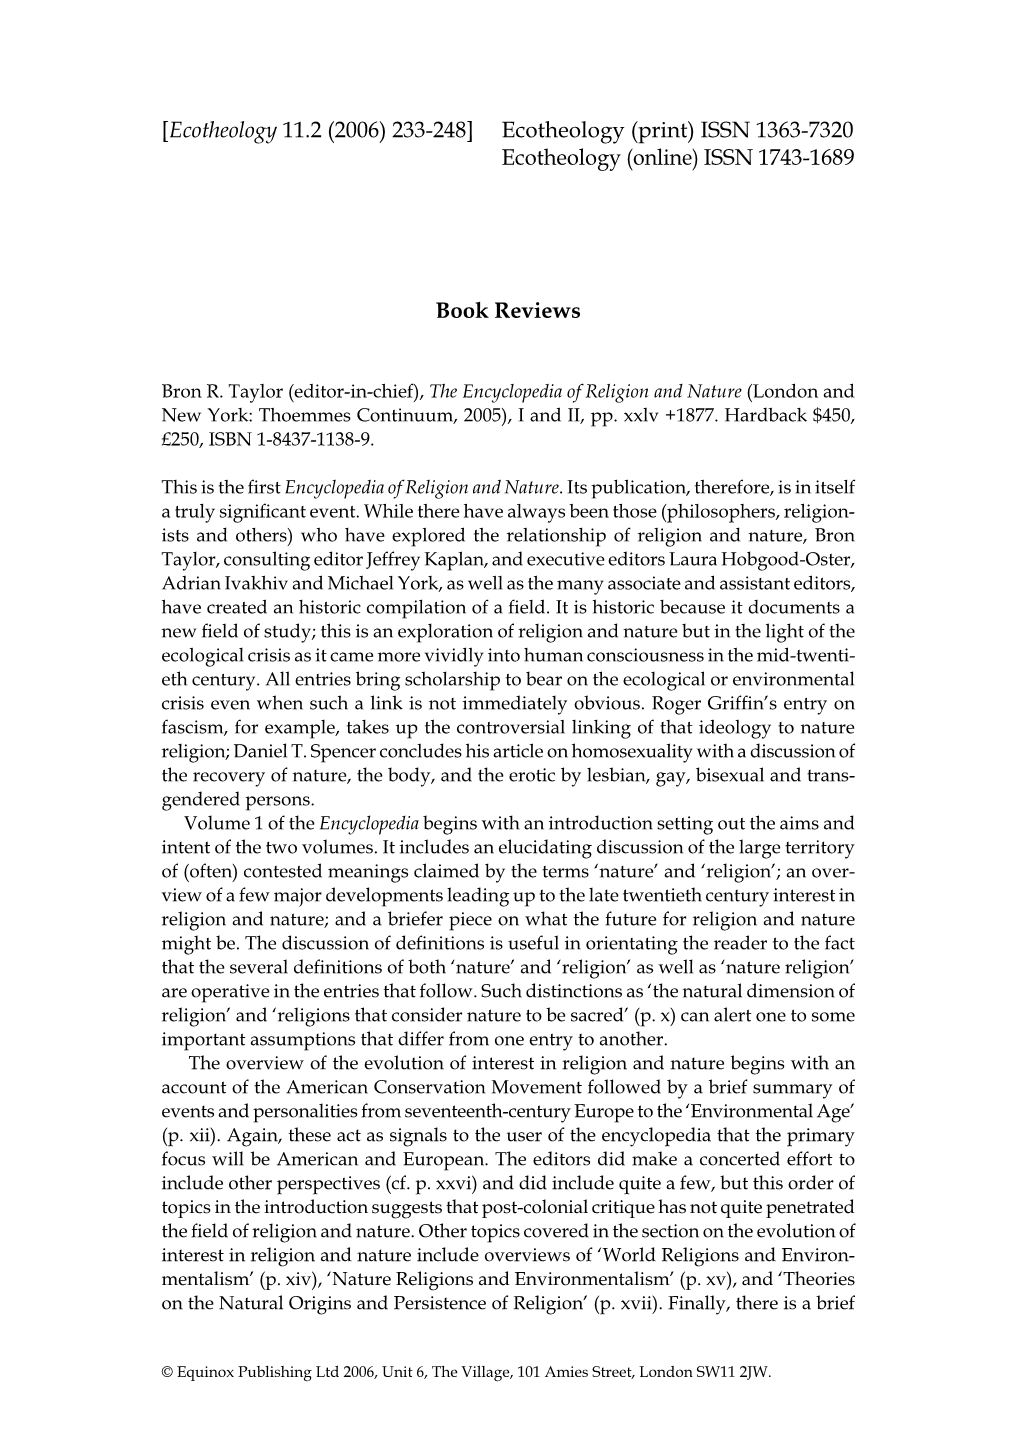 Ecotheology 11.2 (2006) 233-248] Ecotheology (Print) ISSN 1363-7320 Ecotheology (Online) ISSN 1743-1689